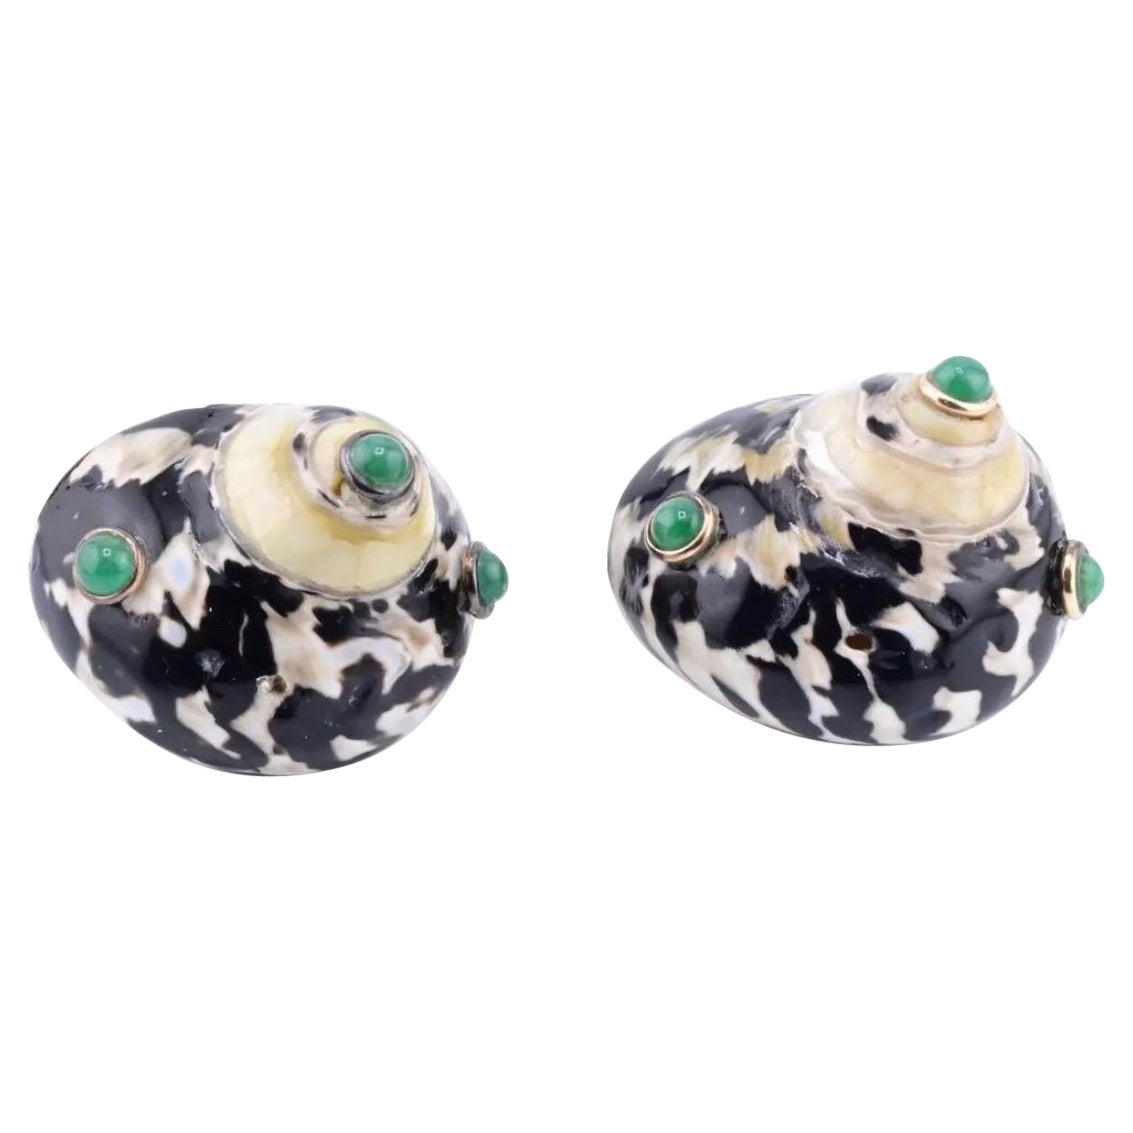 Marvelous Pair Of 14K Maz Seashell Earrings With Gemstones Seaman Schepps Style